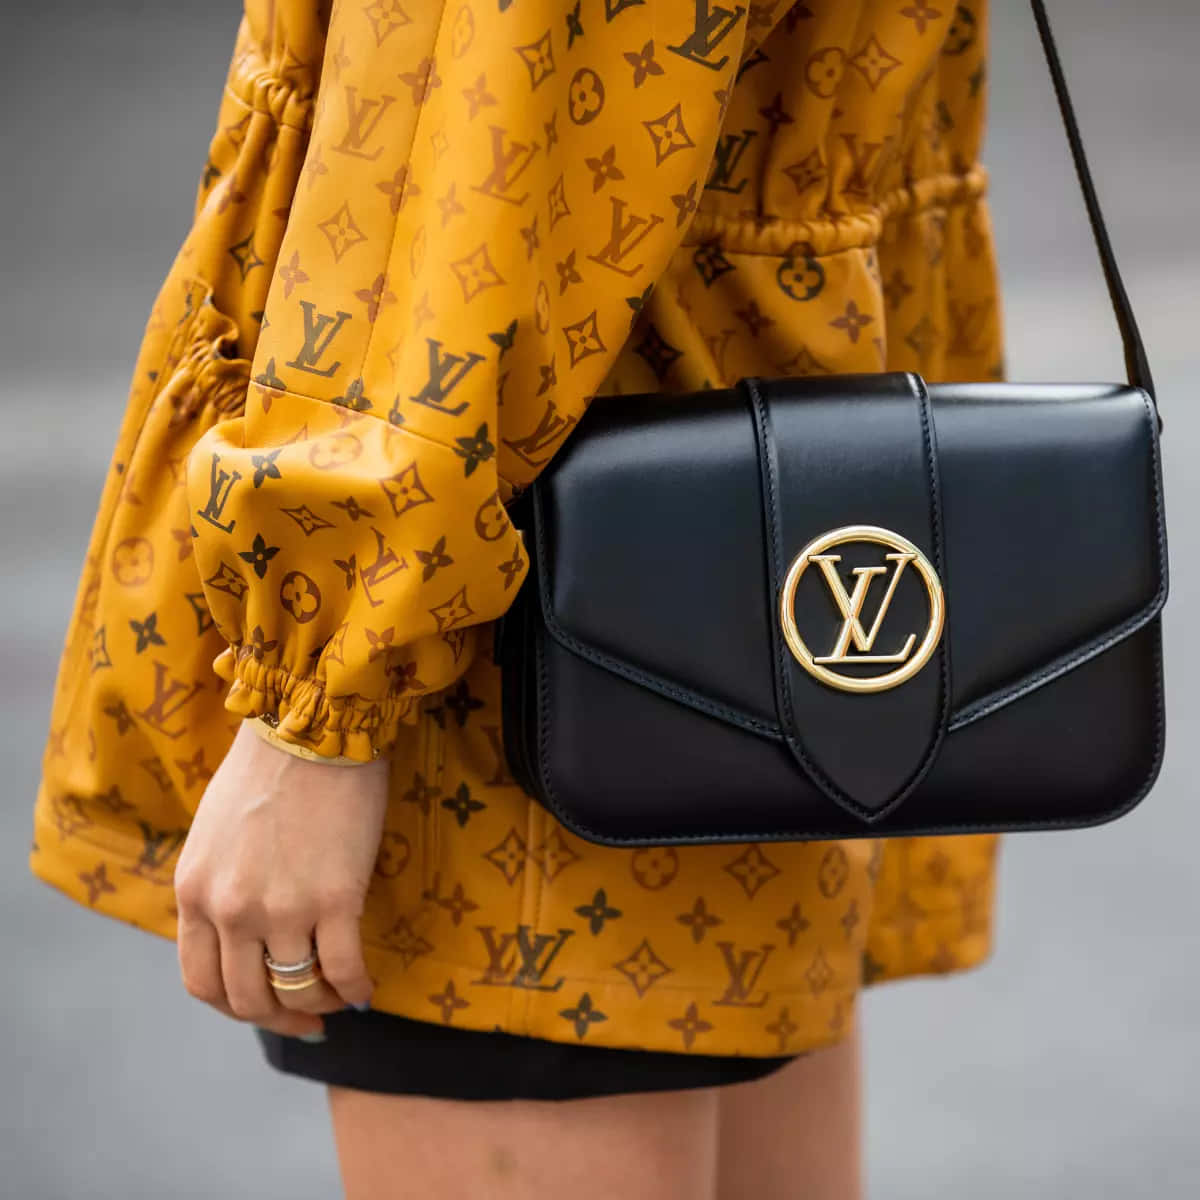 Den uforanderlige luksus af Louis Vuitton